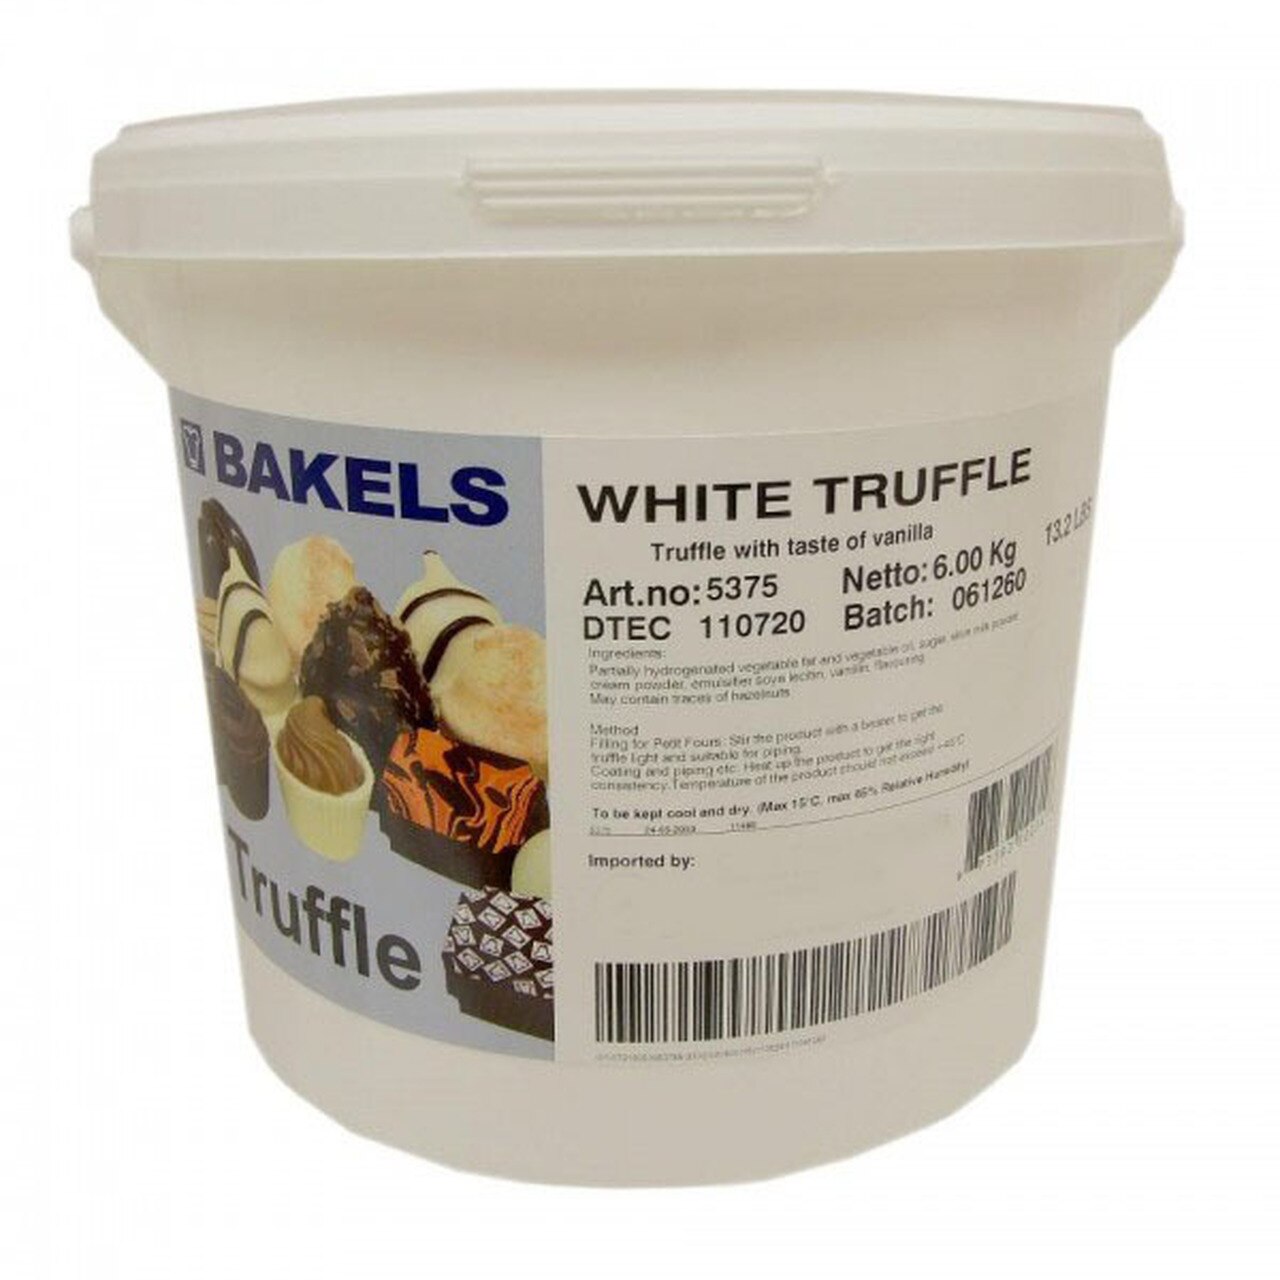 WHITE Bakels RTU Ganache White Truffle - 500g